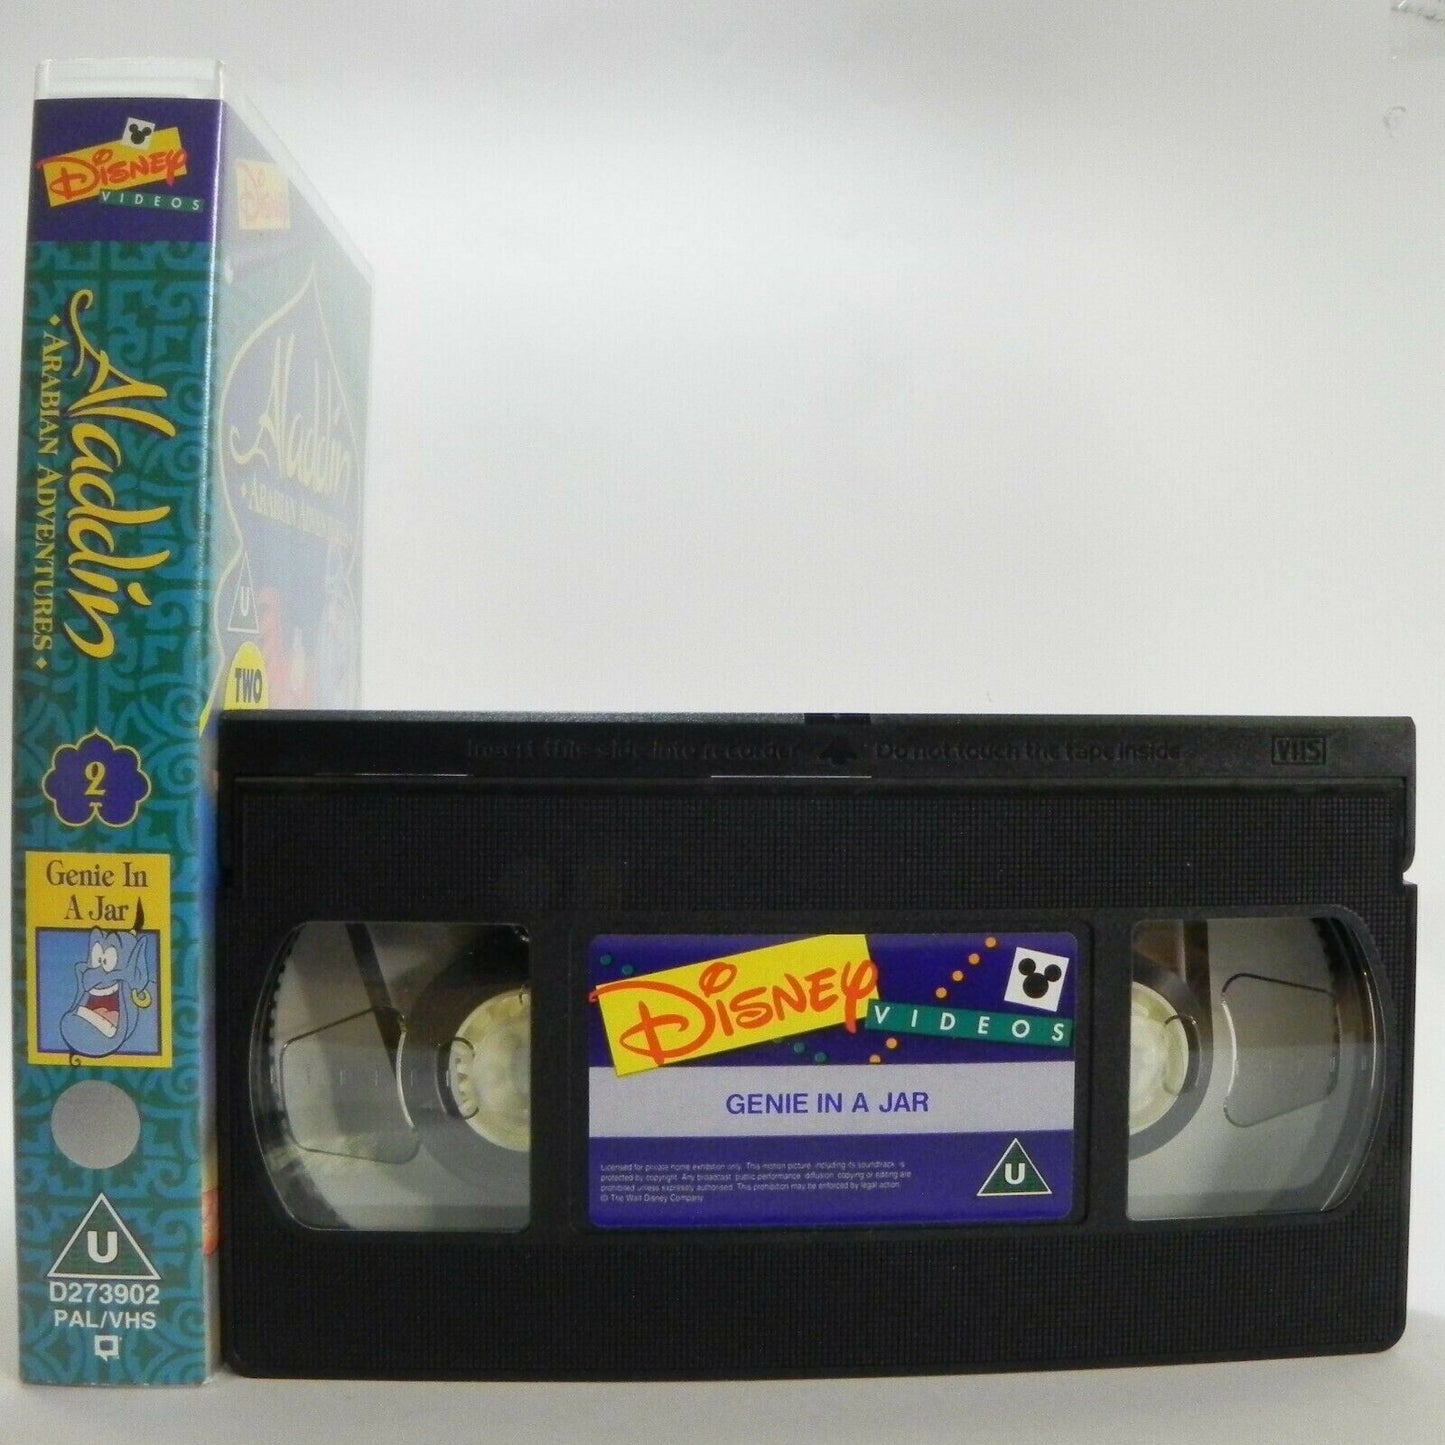 Aladdin: Arabian Adventures - Disney Classic - Animated - Children's - Pal VHS-